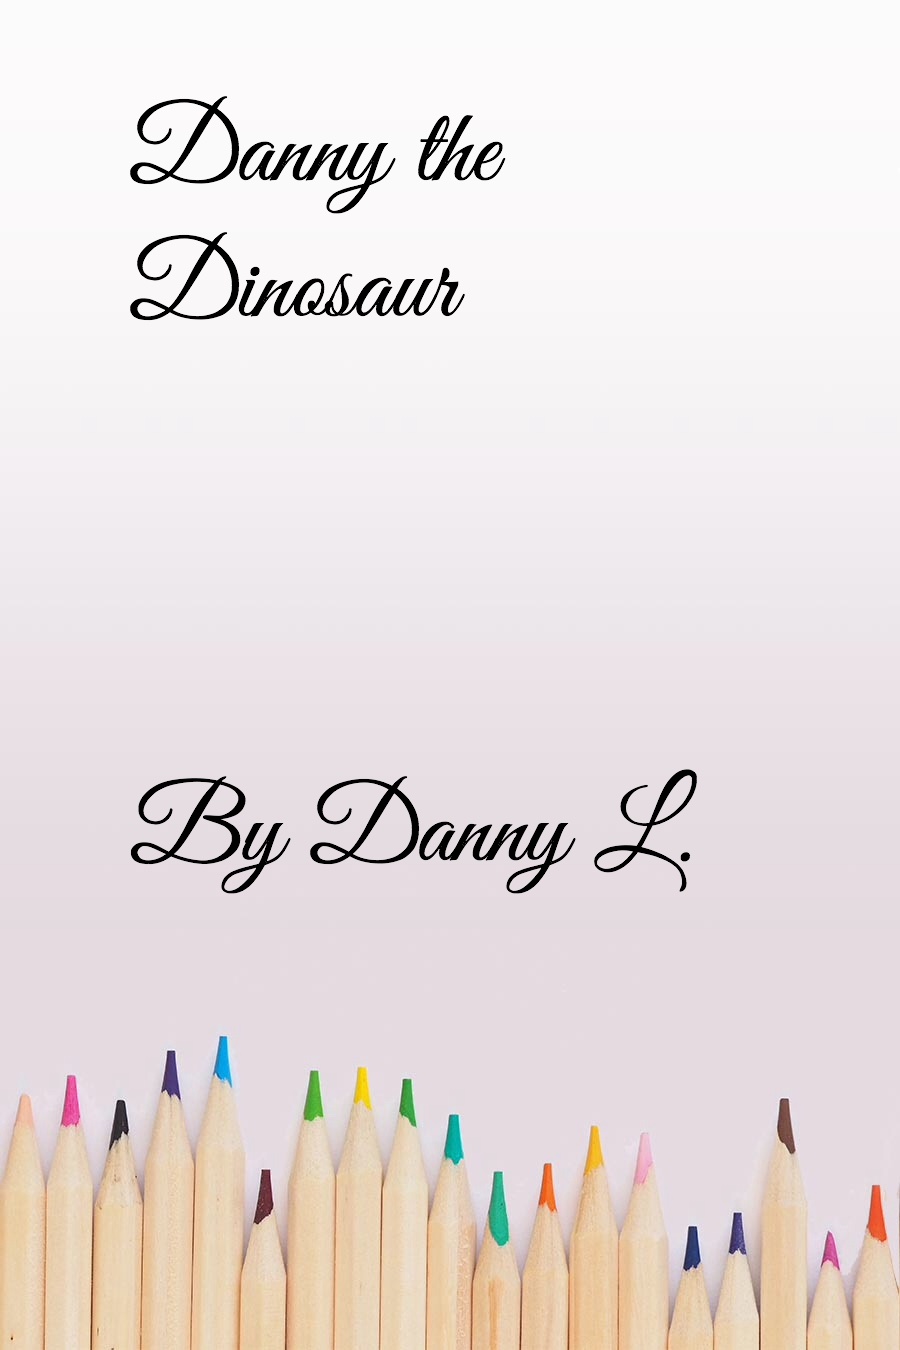 Danny the Dinosaur